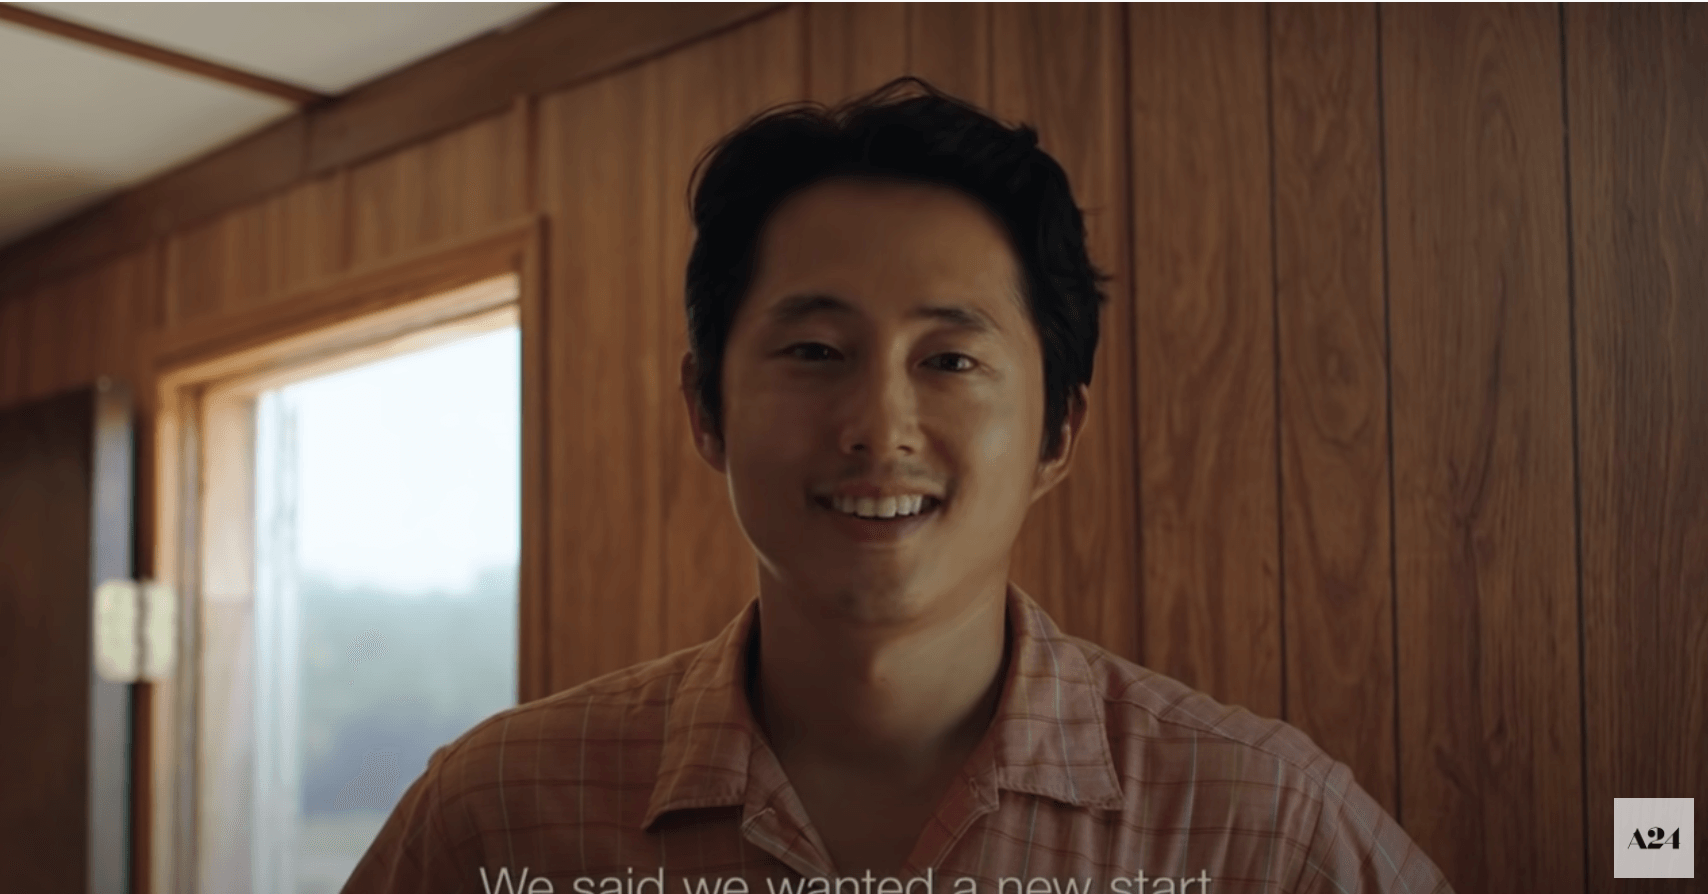 Korean immigrant drama ‘Minari’ pushes language, acting barriers